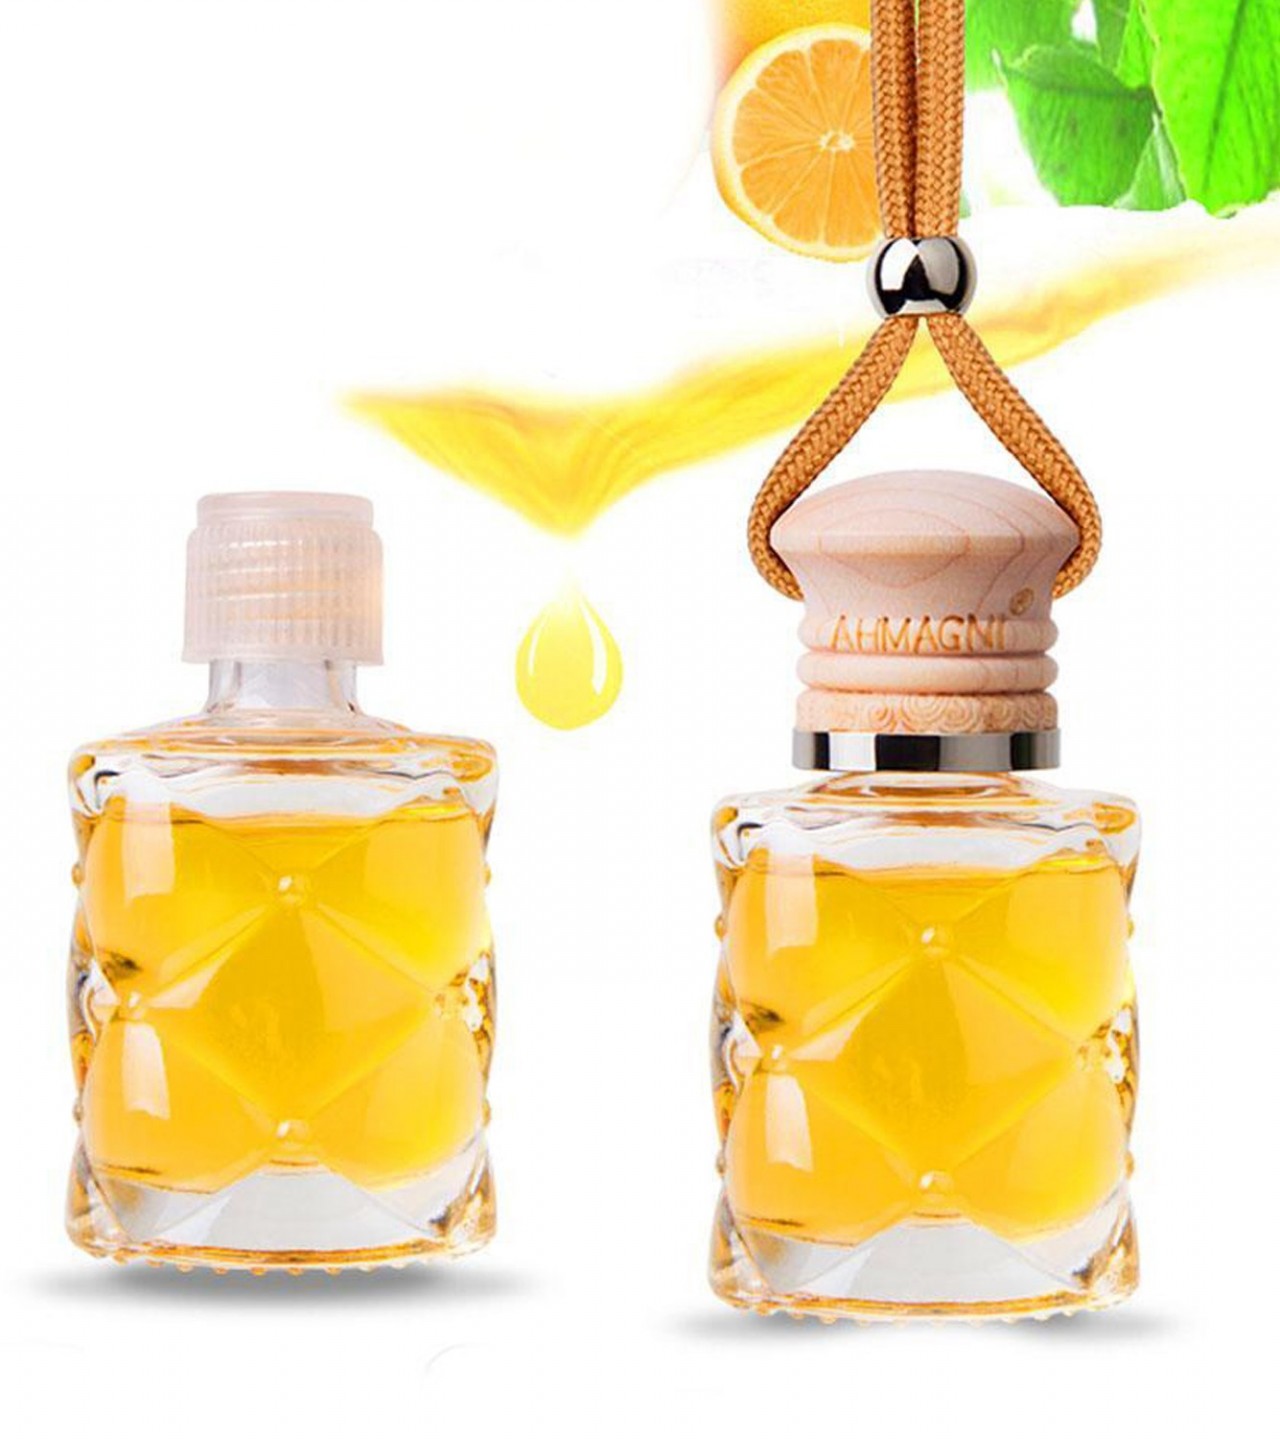 AHMAGNI Car Perfume Oils - Yellow - 10 ml Each